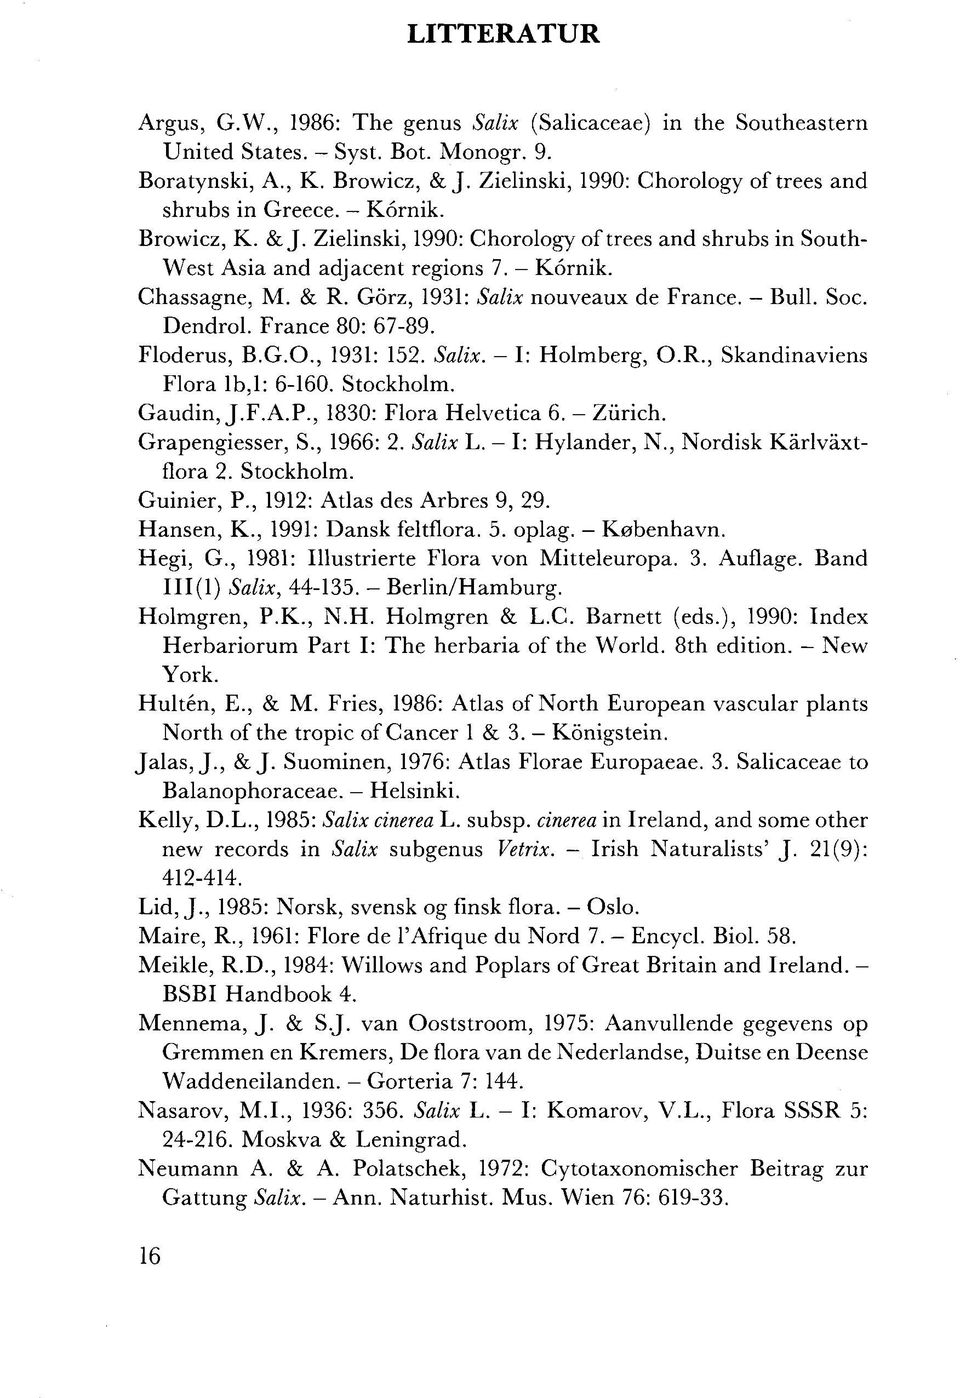 Görz, 1931: Salix nouveaux de France. - Bull. Soc. Dendrol. France 80: 67-89. Floderus, B.G.O., 1931: 152. Salix. - I: Holmberg, O.R., Skandinaviens Flora lb,l: 6-160. Stockholm. Gaudin, J.F.A.P.